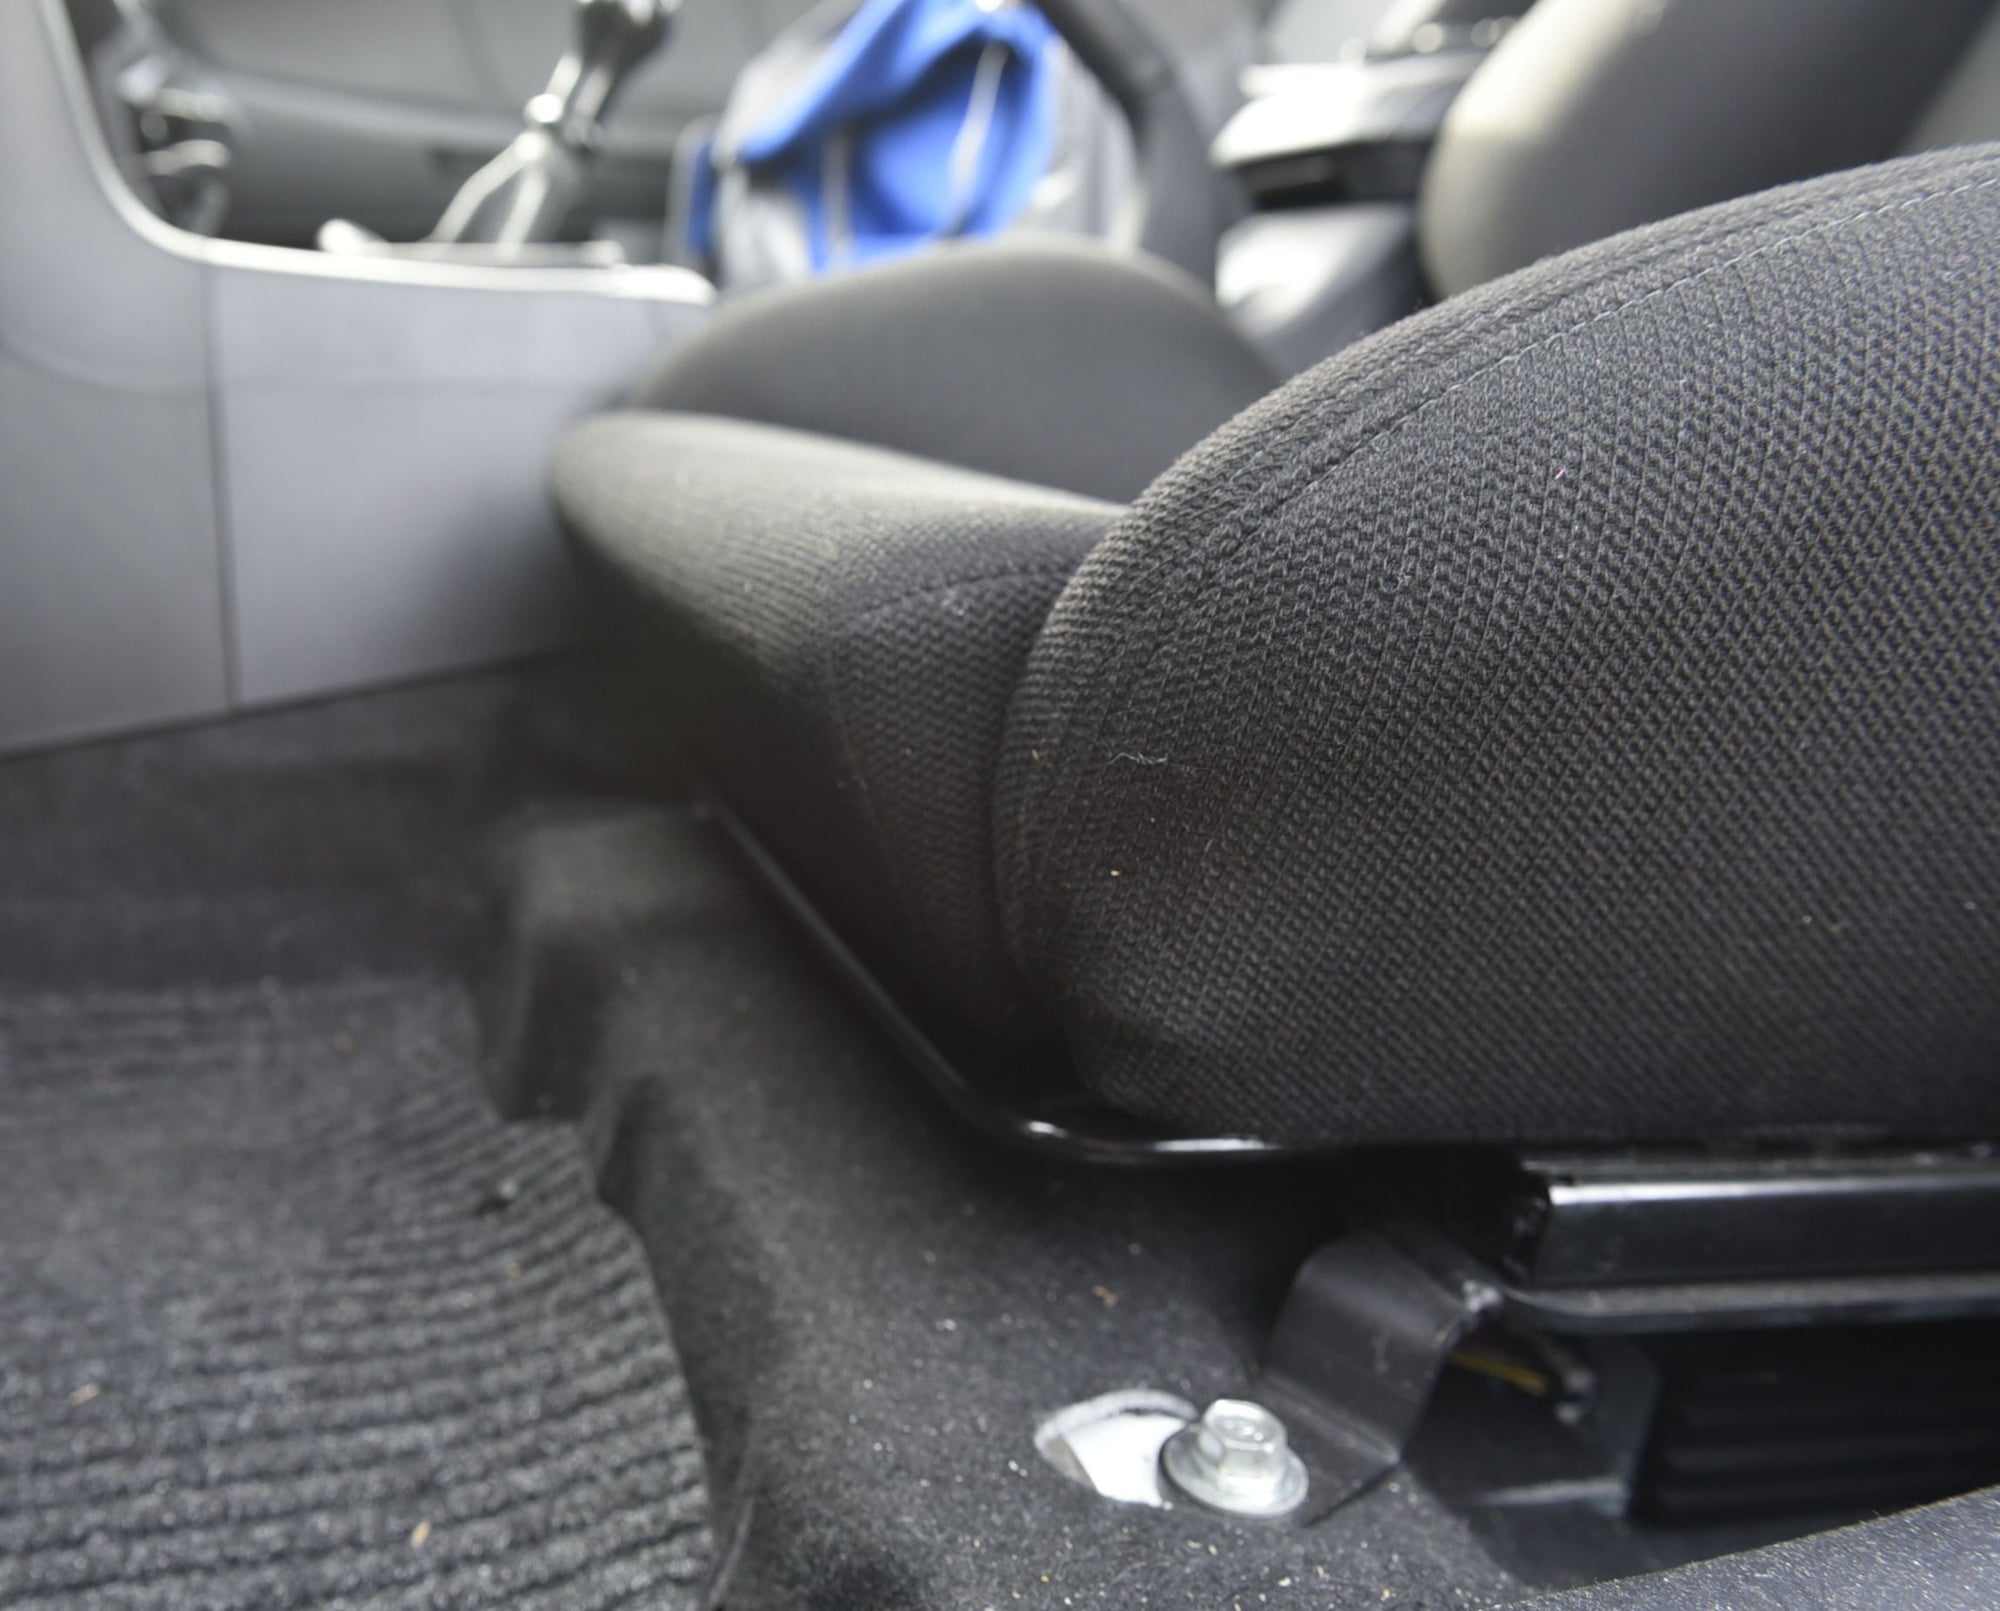 Interior/Upholstery - Recaro Speed and double locking sliders - Used - 2008 to 2015 Mitsubishi Lancer Evolution - Brooklyn, NY 11223, United States